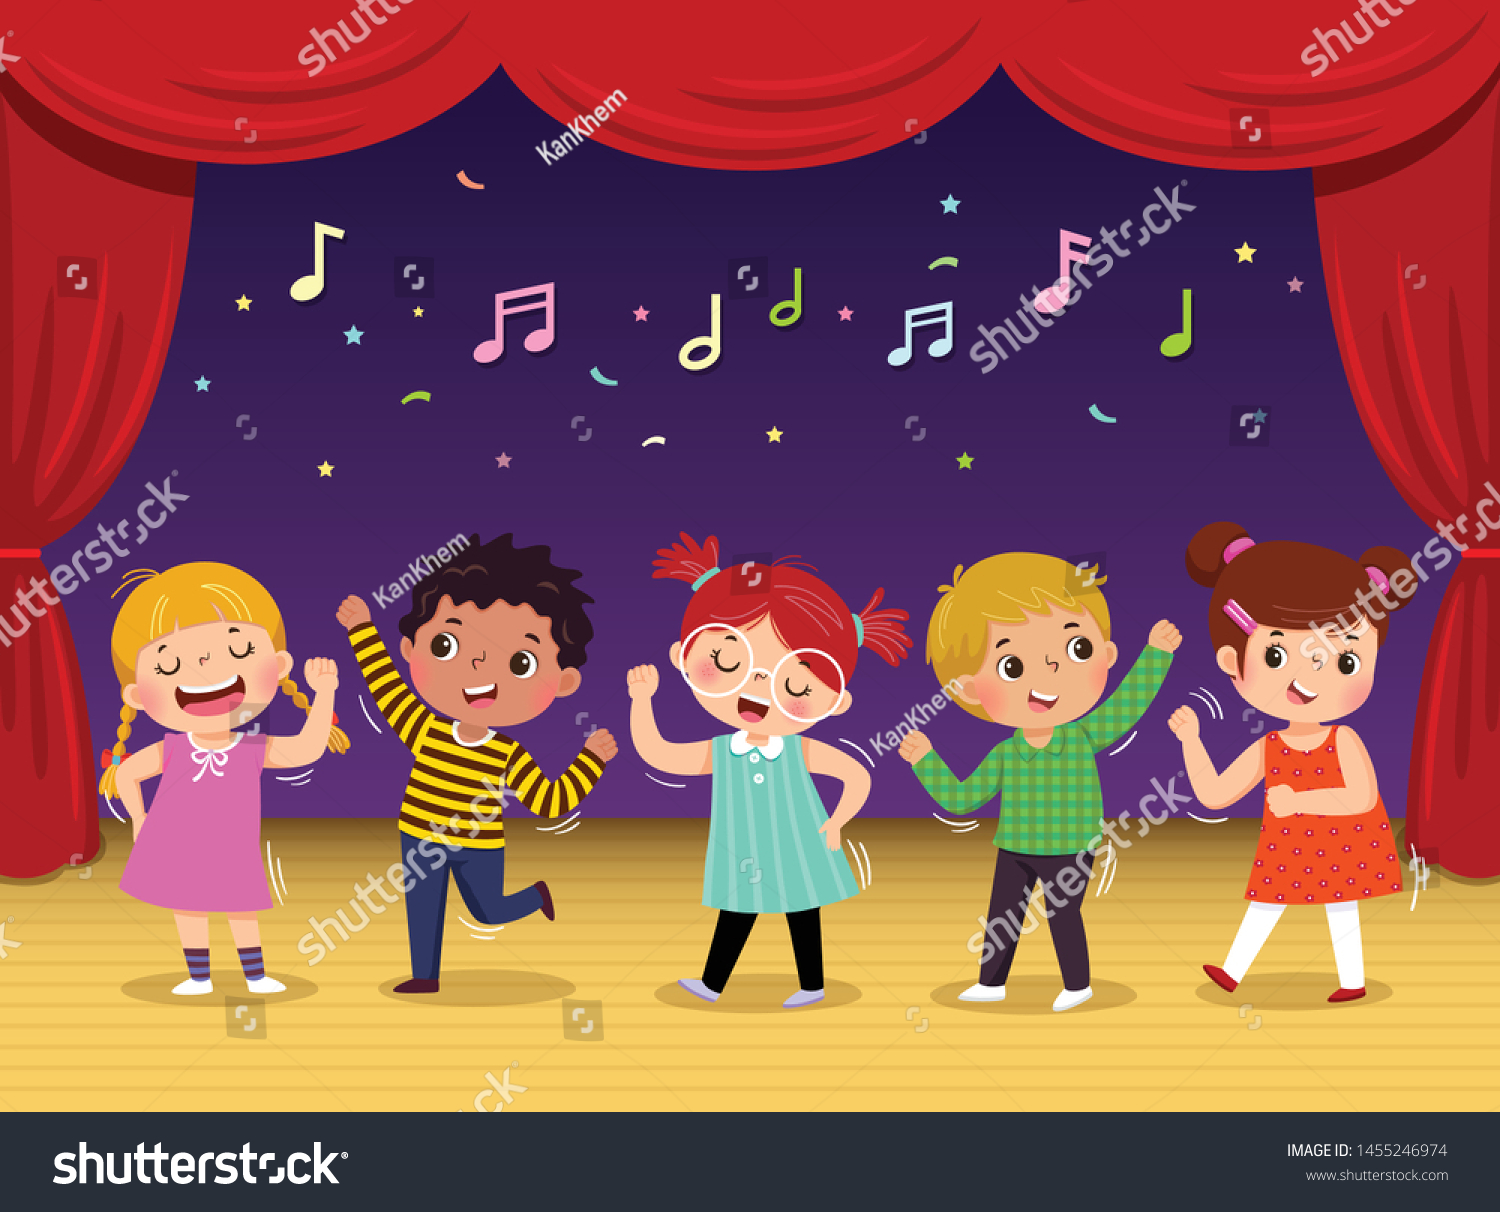 2-004-cartoon-kids-dancing-and-singing-images-stock-photos-vectors